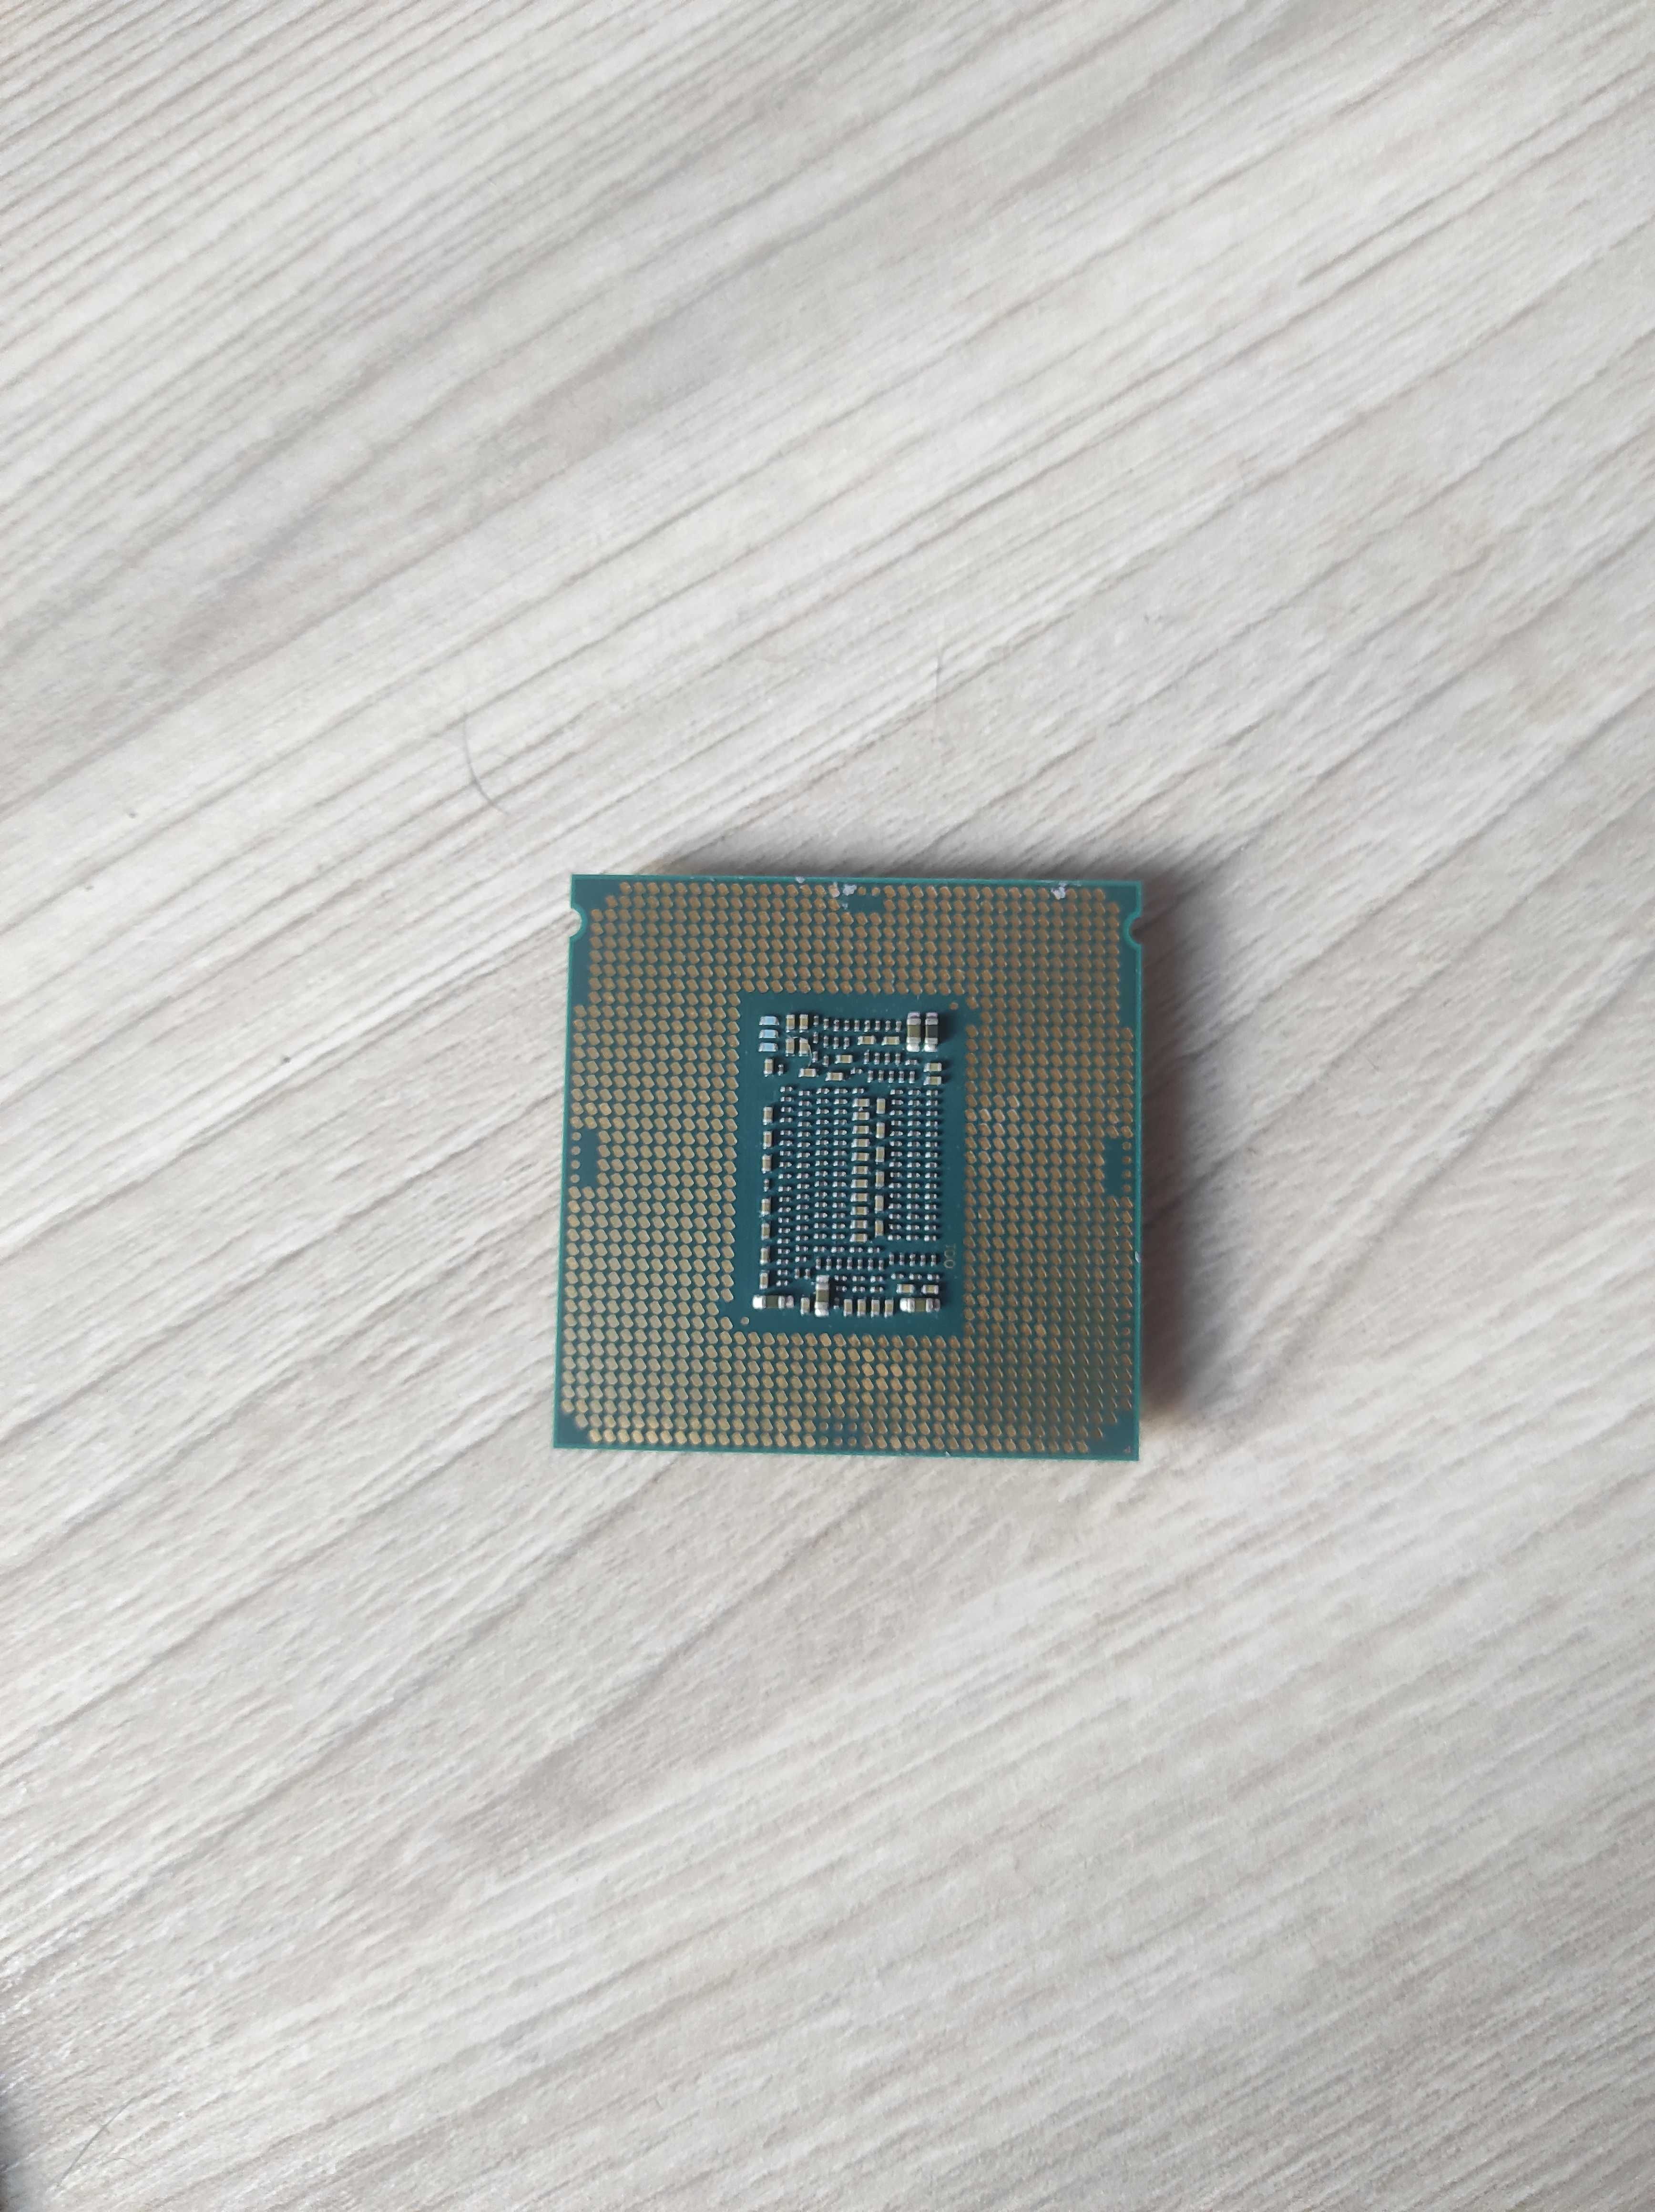 Процесор Intel Core i5-8400v2 2.80GHz tray